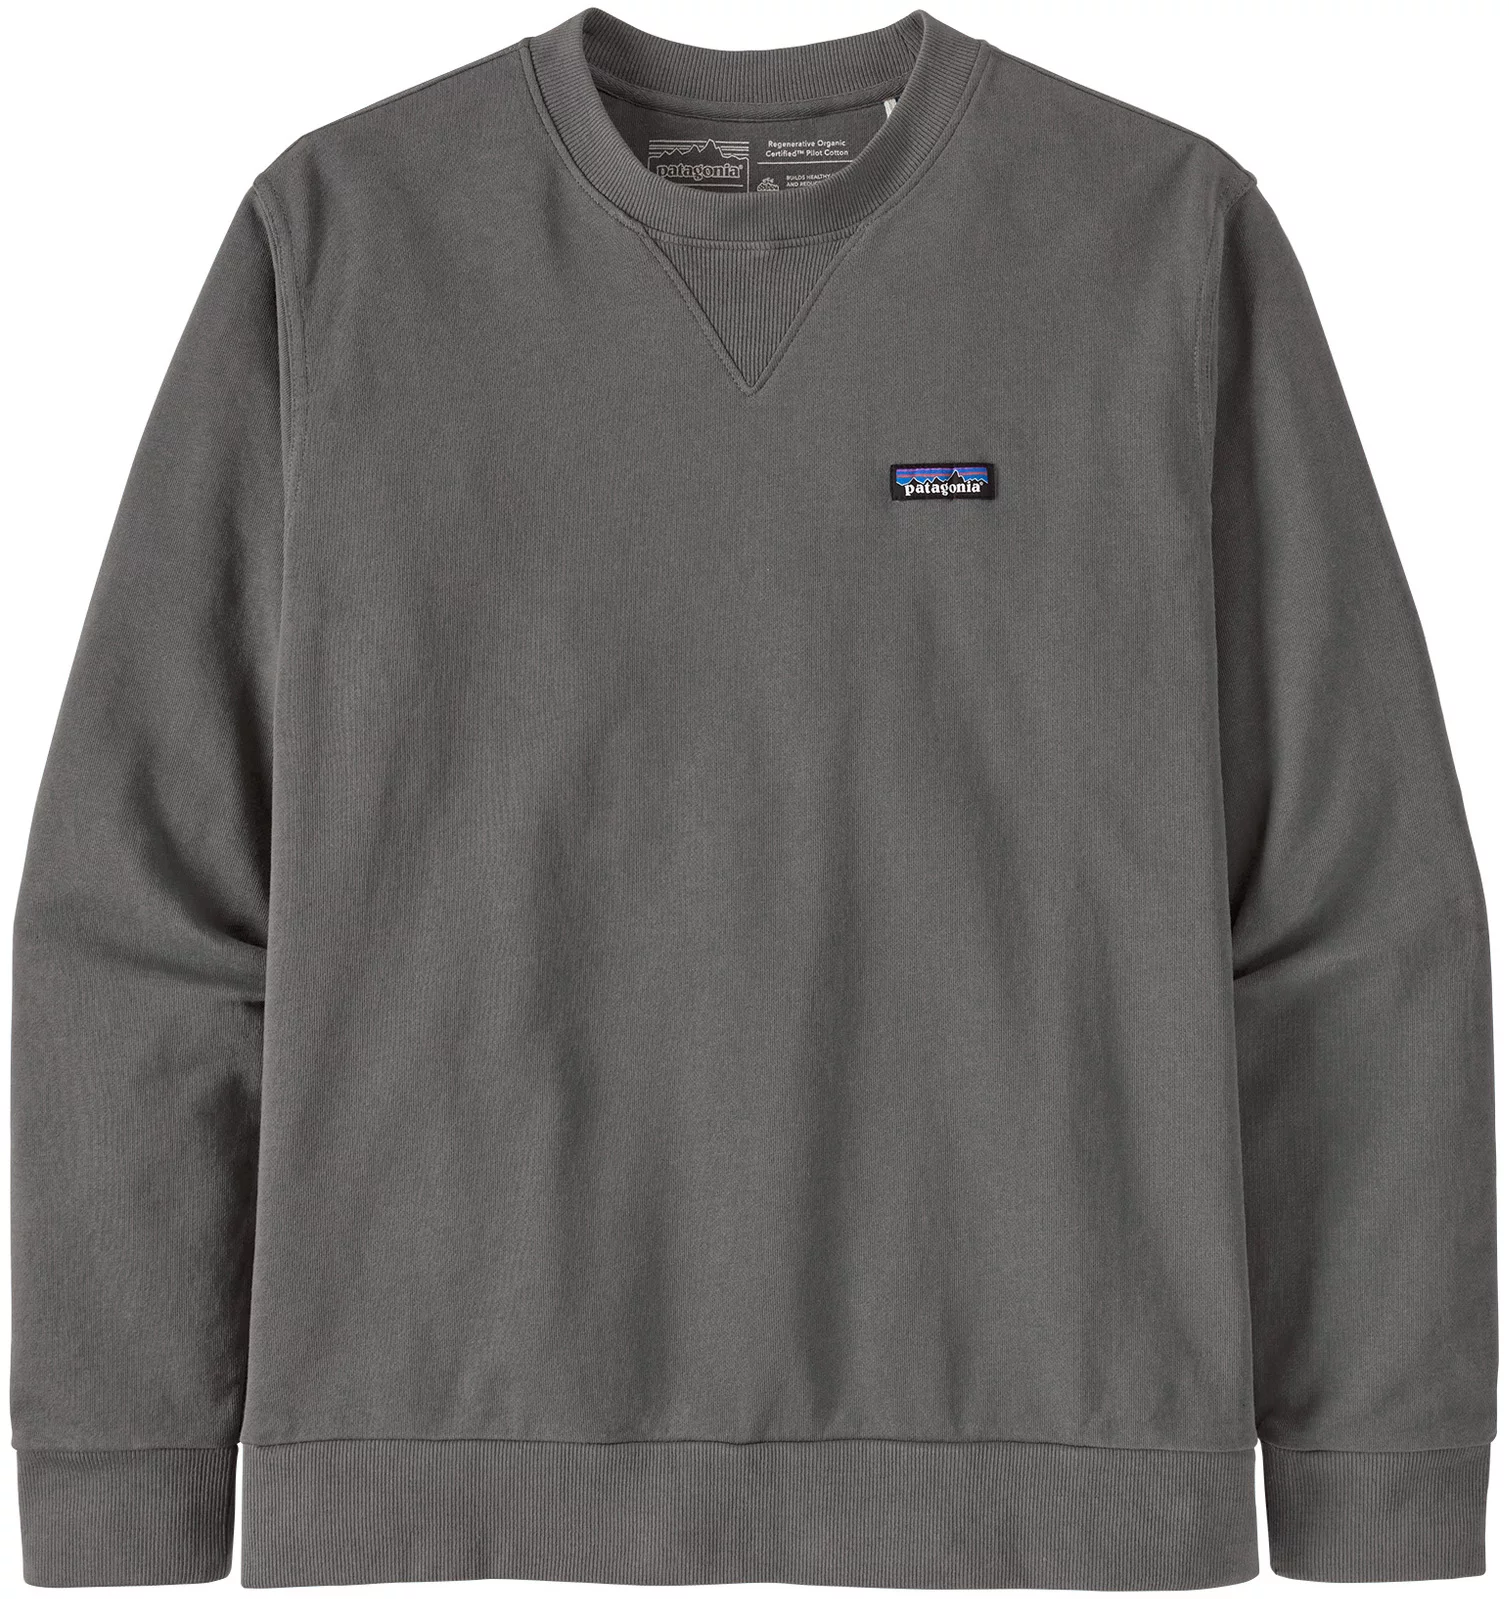 Patagonia - Regenerative Organic Certified Cotton Crewneck Sweatshirt - Noble Grey - S